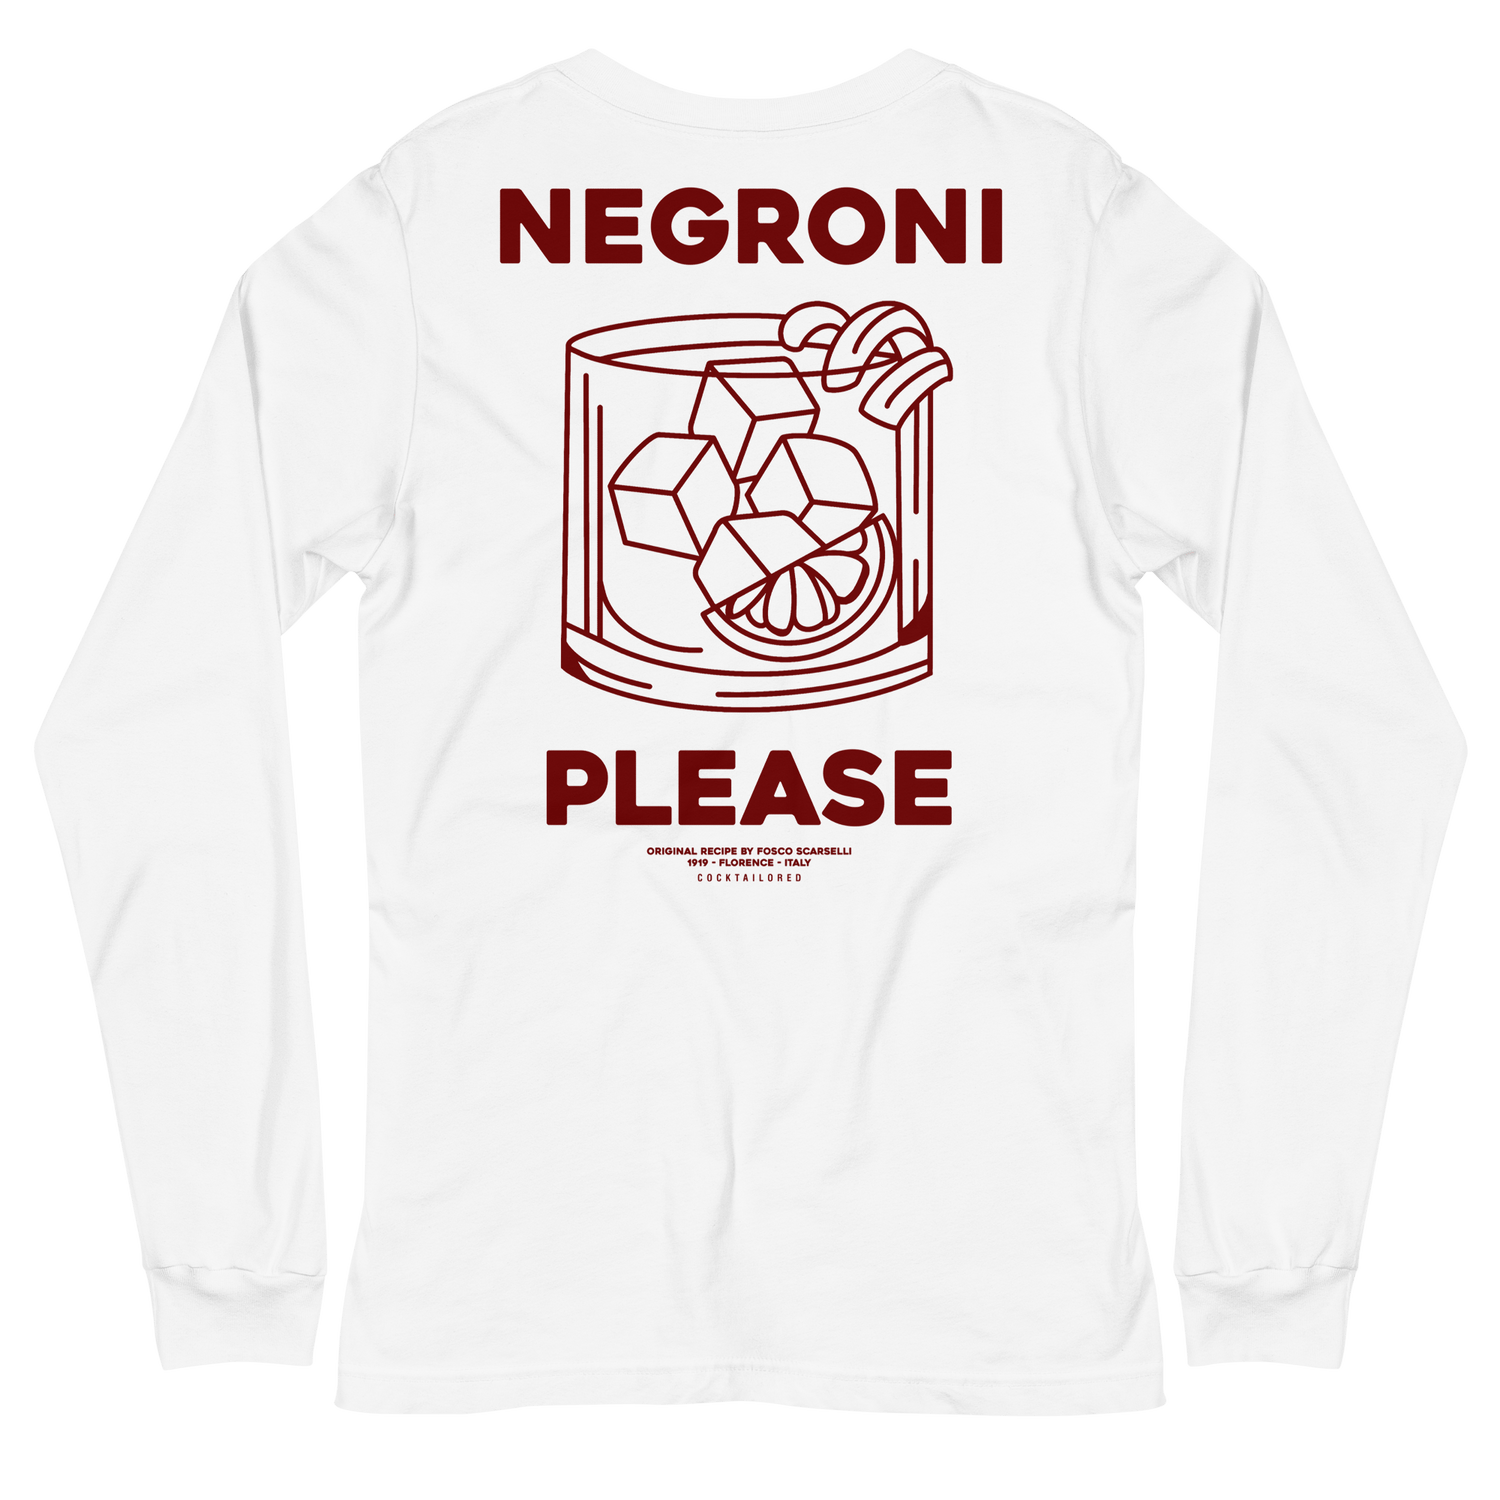 The Negroni Pls. Long Sleeve Tee